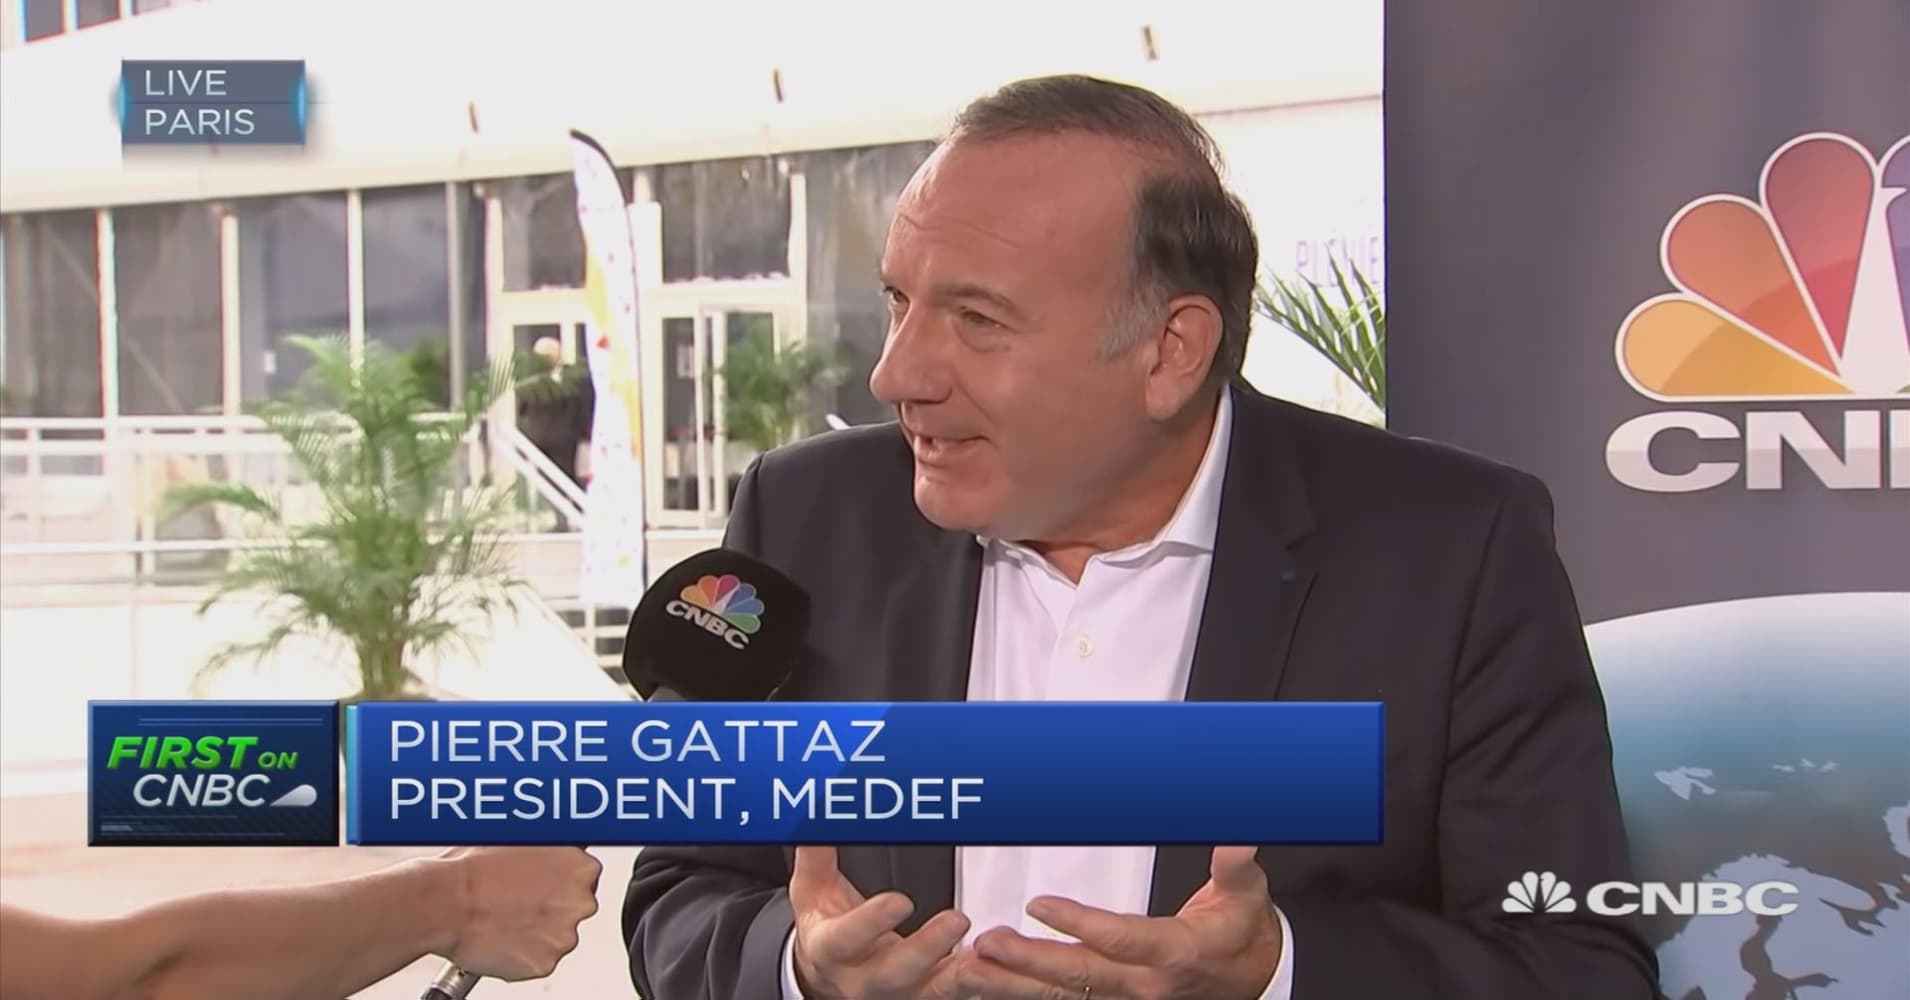 Macron elected on reform program, he's not hiding anything: Medef president